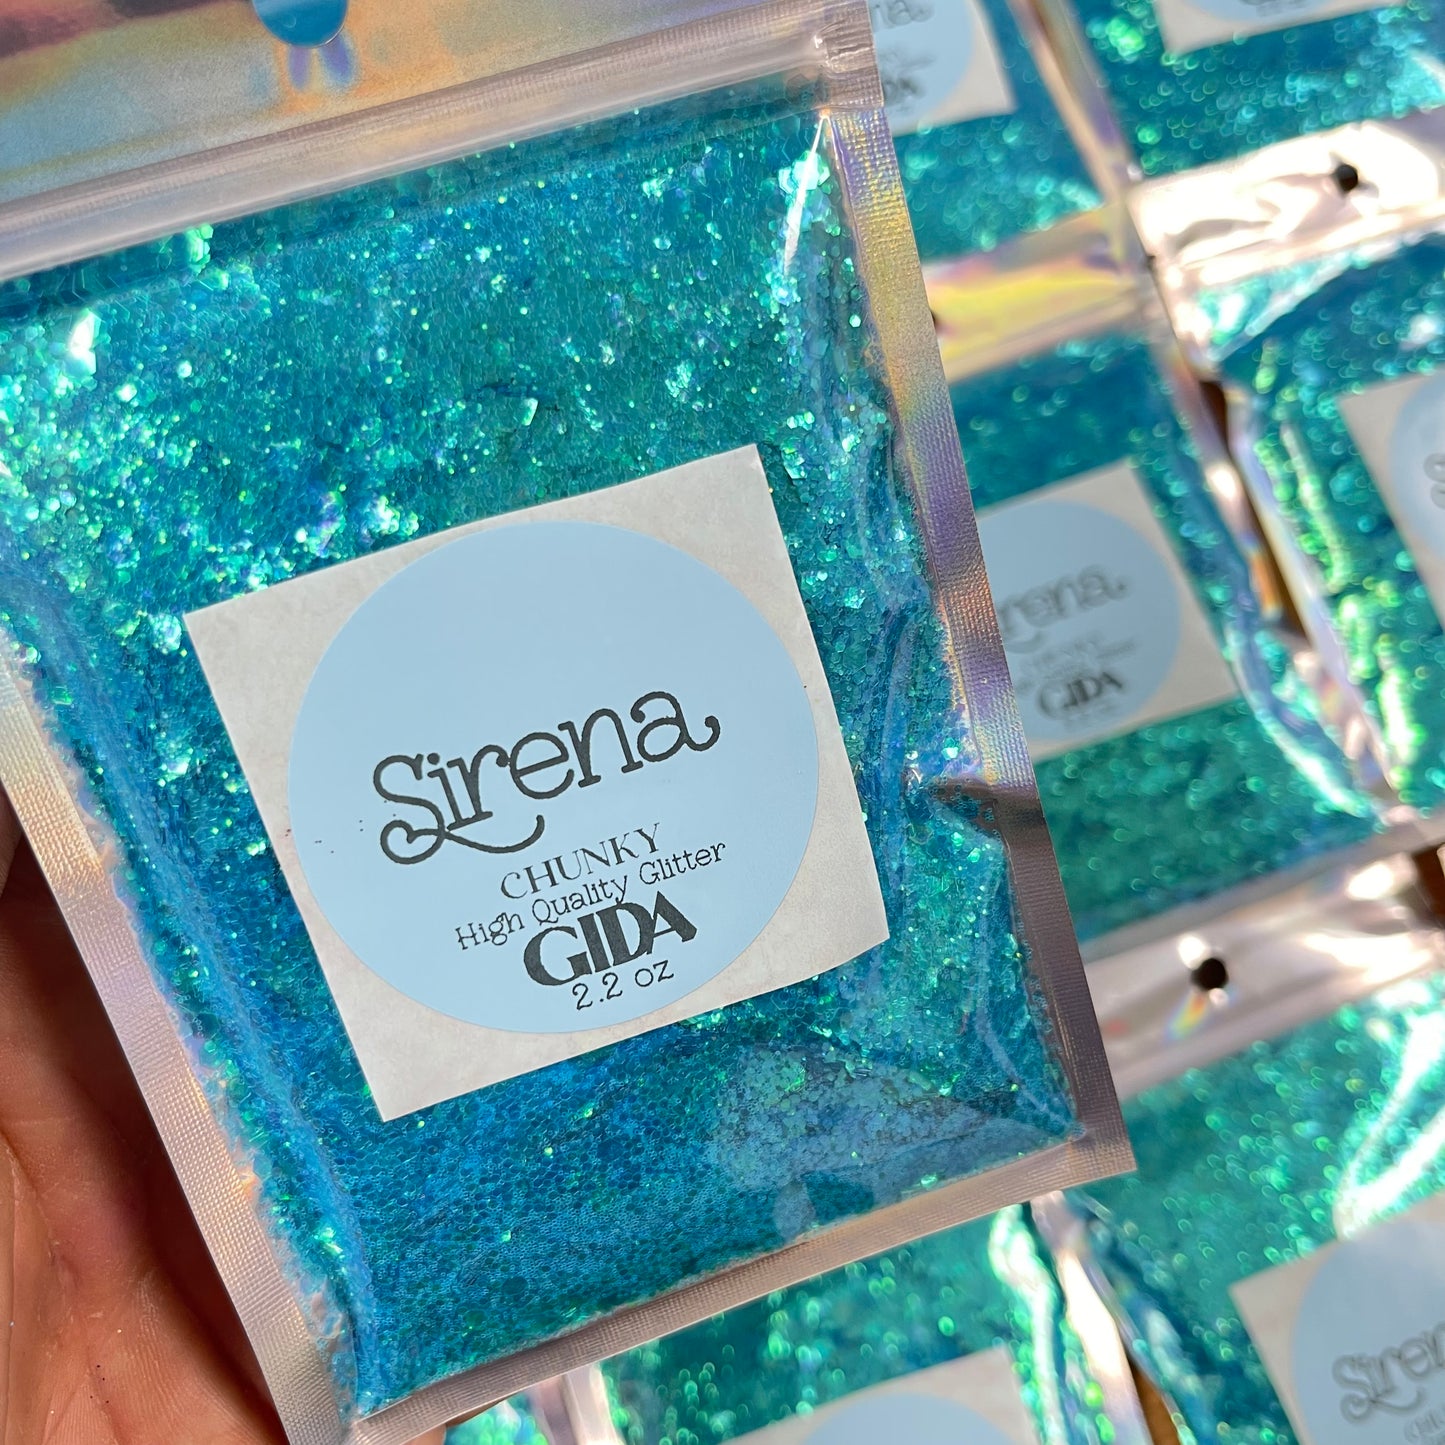 Sirena Chunky Glitter - 2.2 oz - GIDA DESIGN 